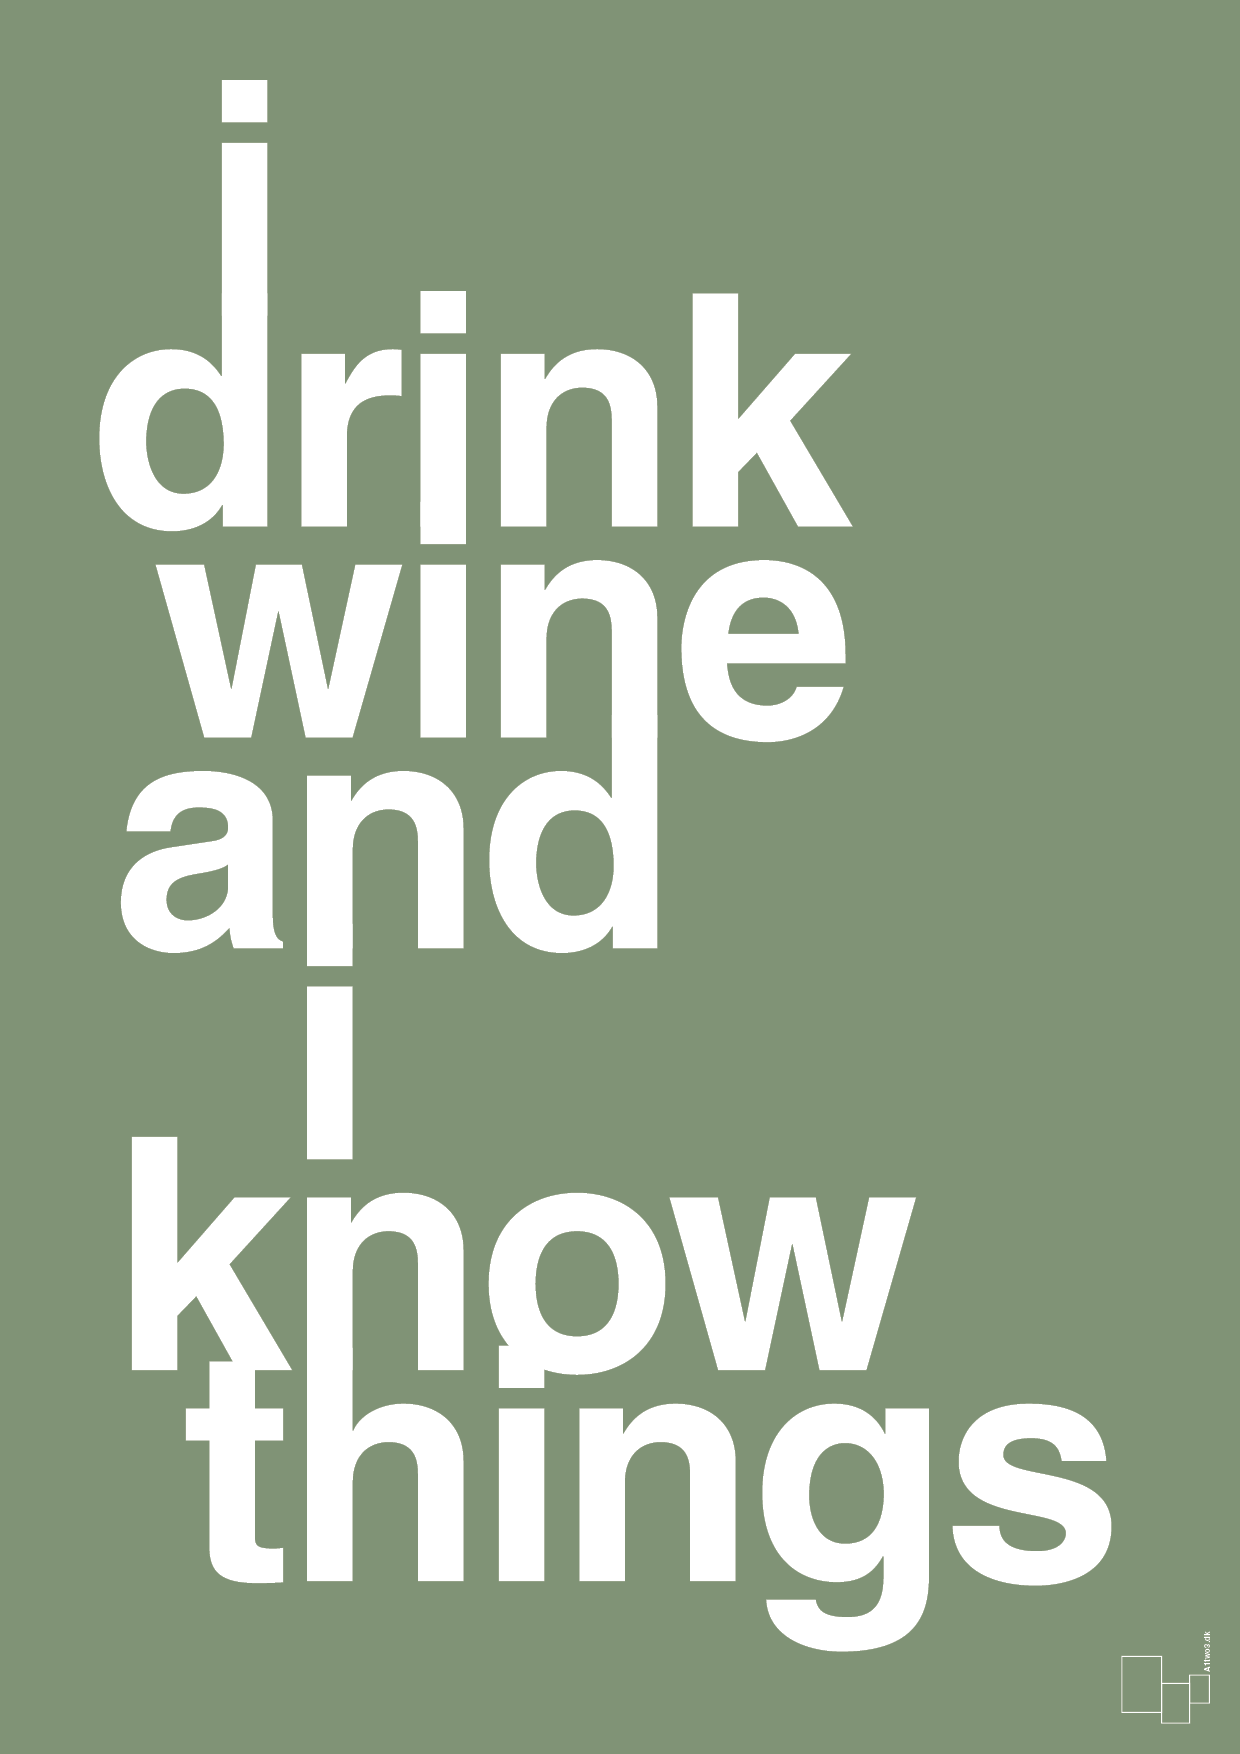 i drink wine and i know things - Plakat med Ordsprog i Jade